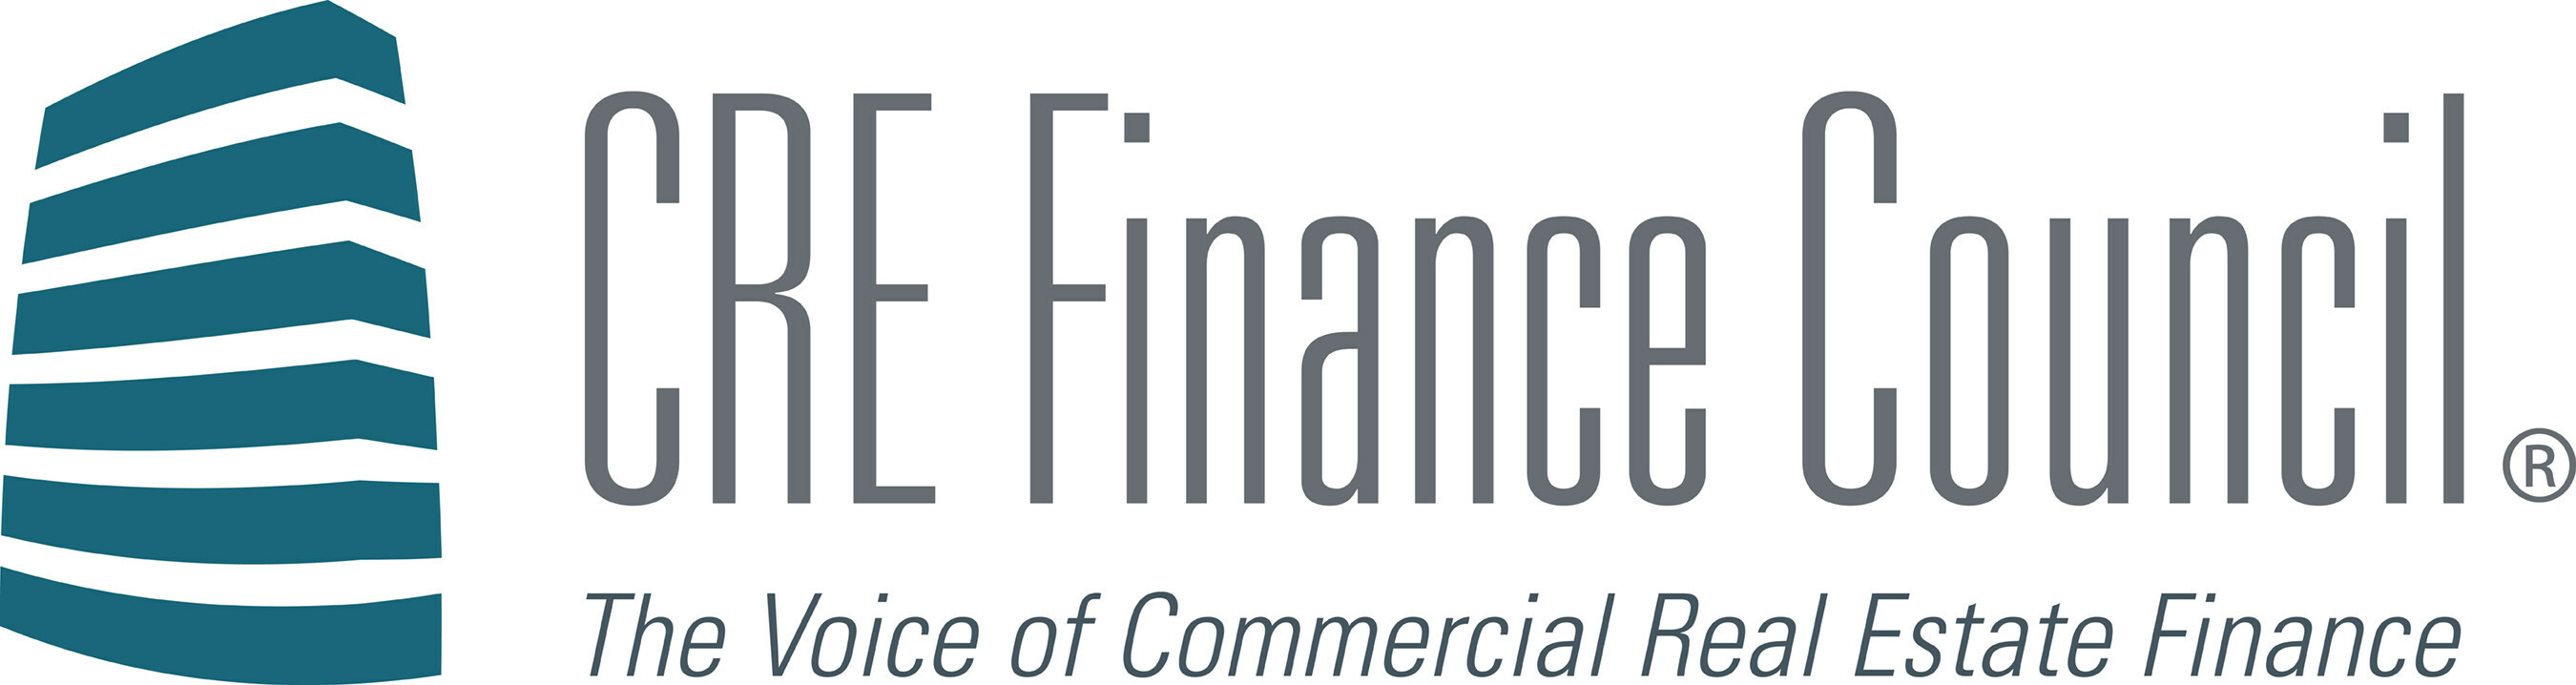 CRE Finance Council Logo (PRNewsfoto/CRE Finance Council)